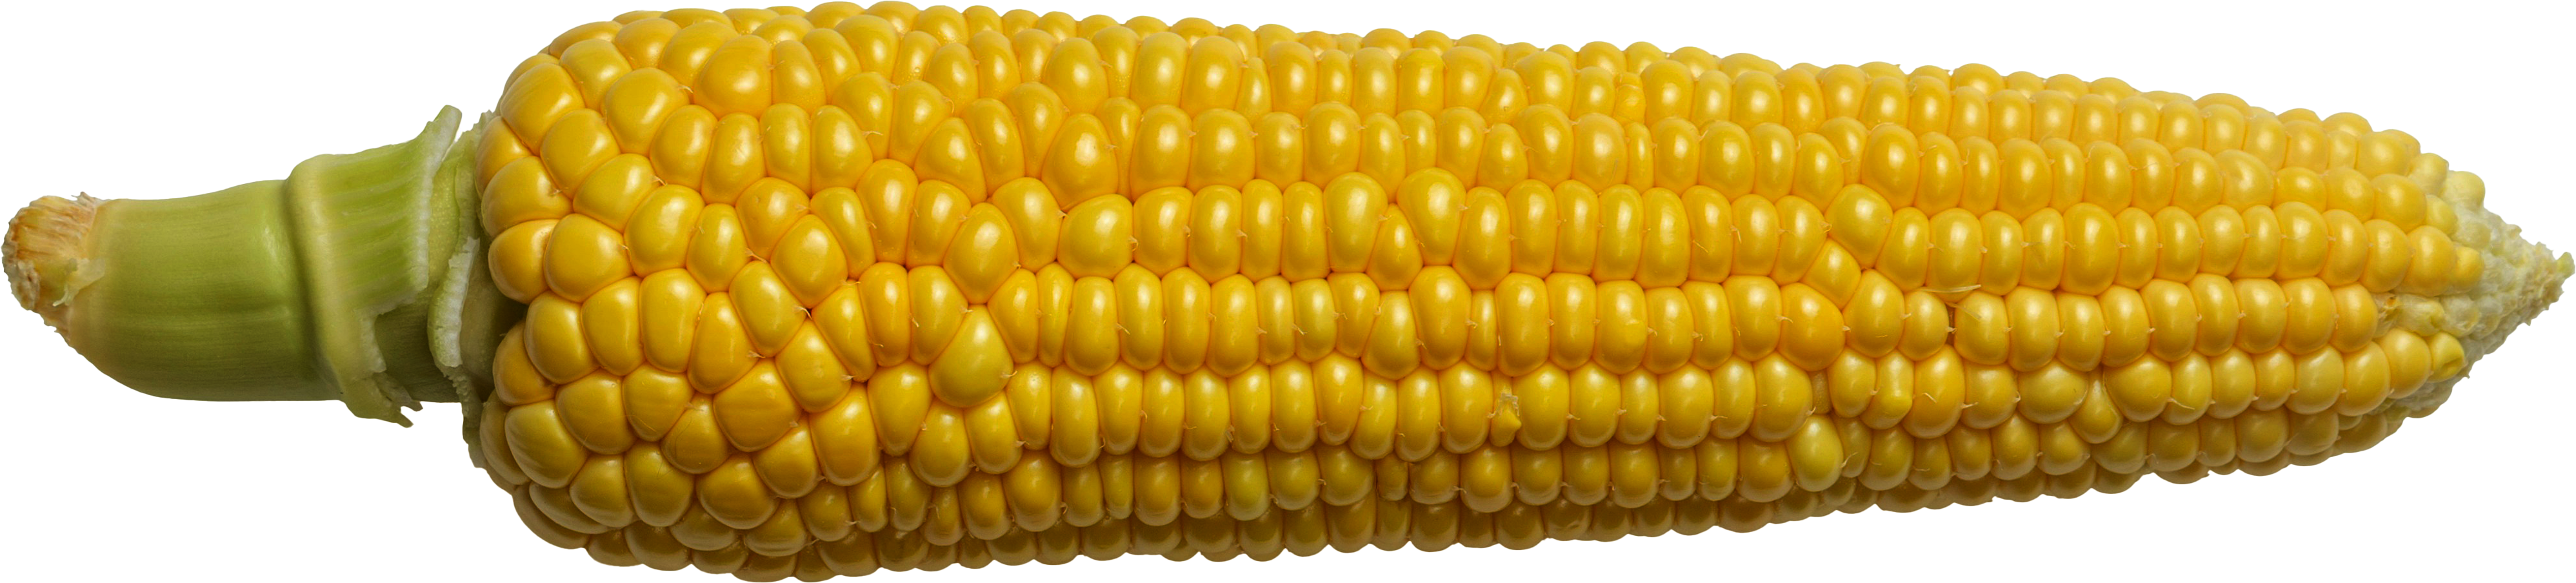 Leh Side Corn